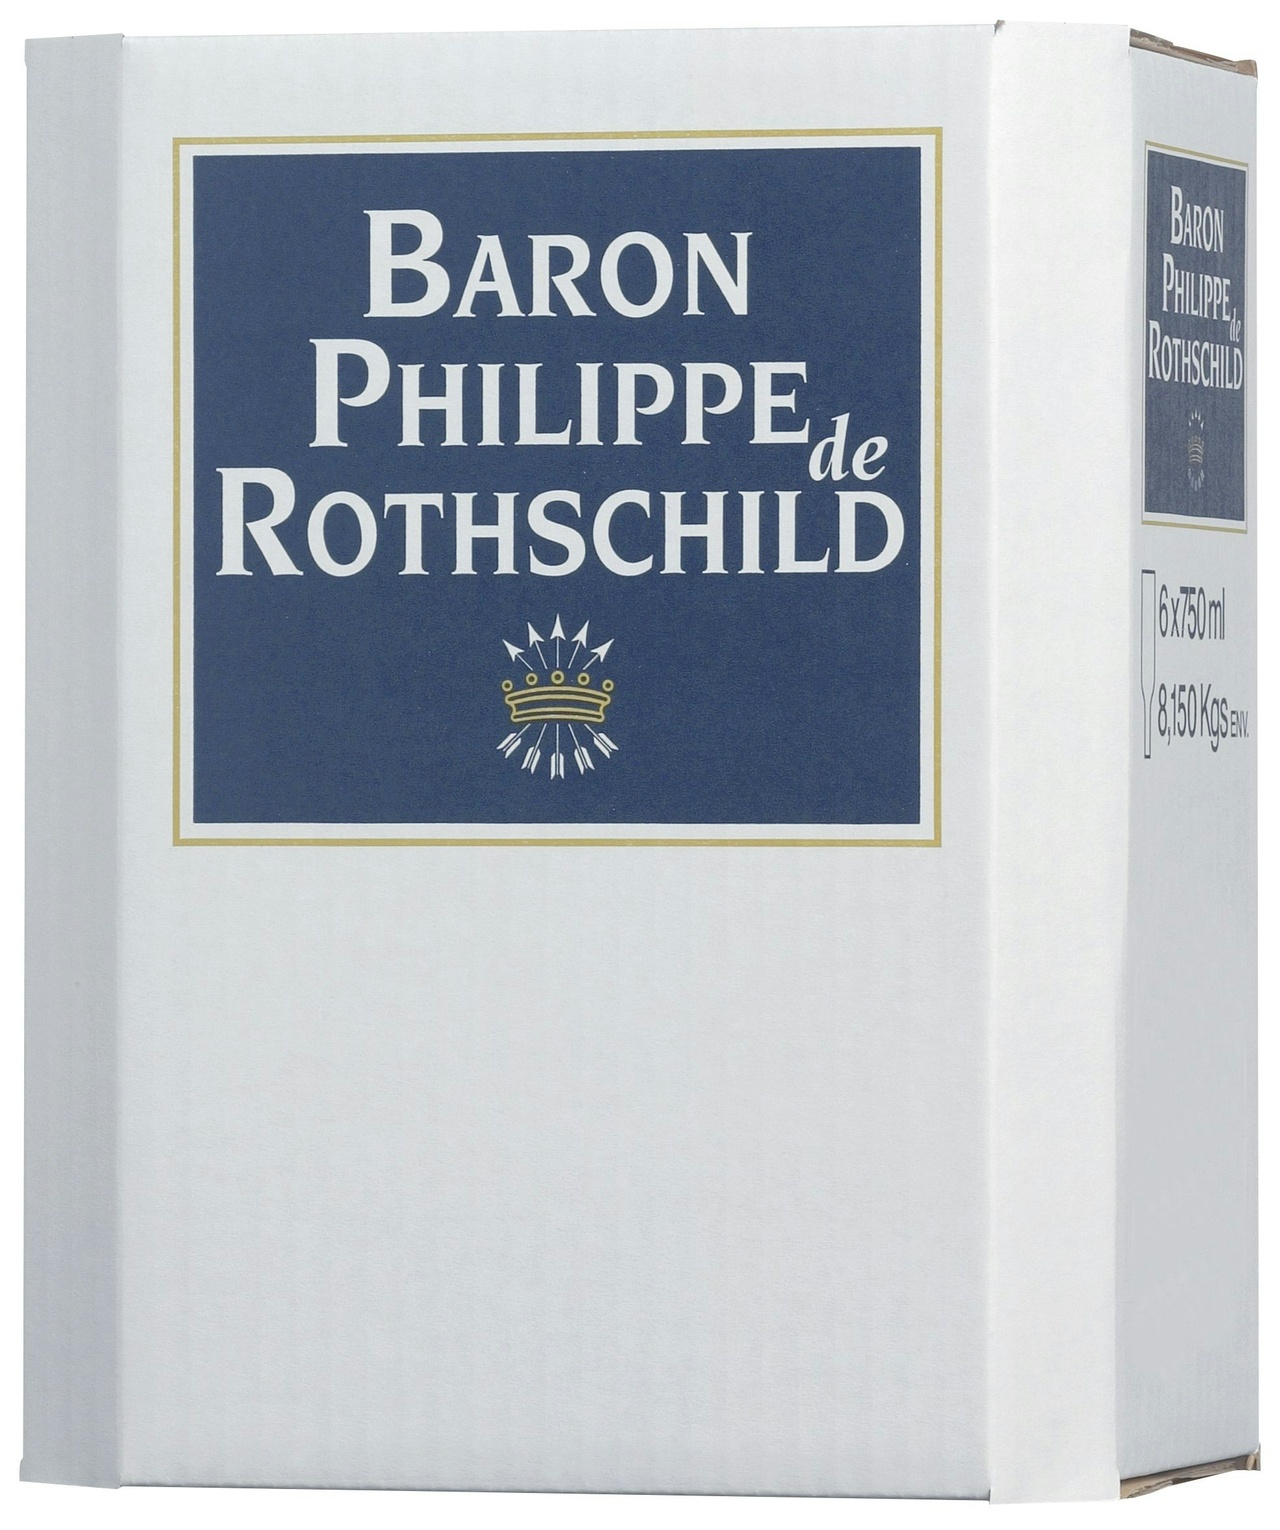 EGGERS + FRANKE Rothschild Bordeaux Rouge AOP Rotwein trocken 6 Flaschen x 0,75 l (4,5 l)